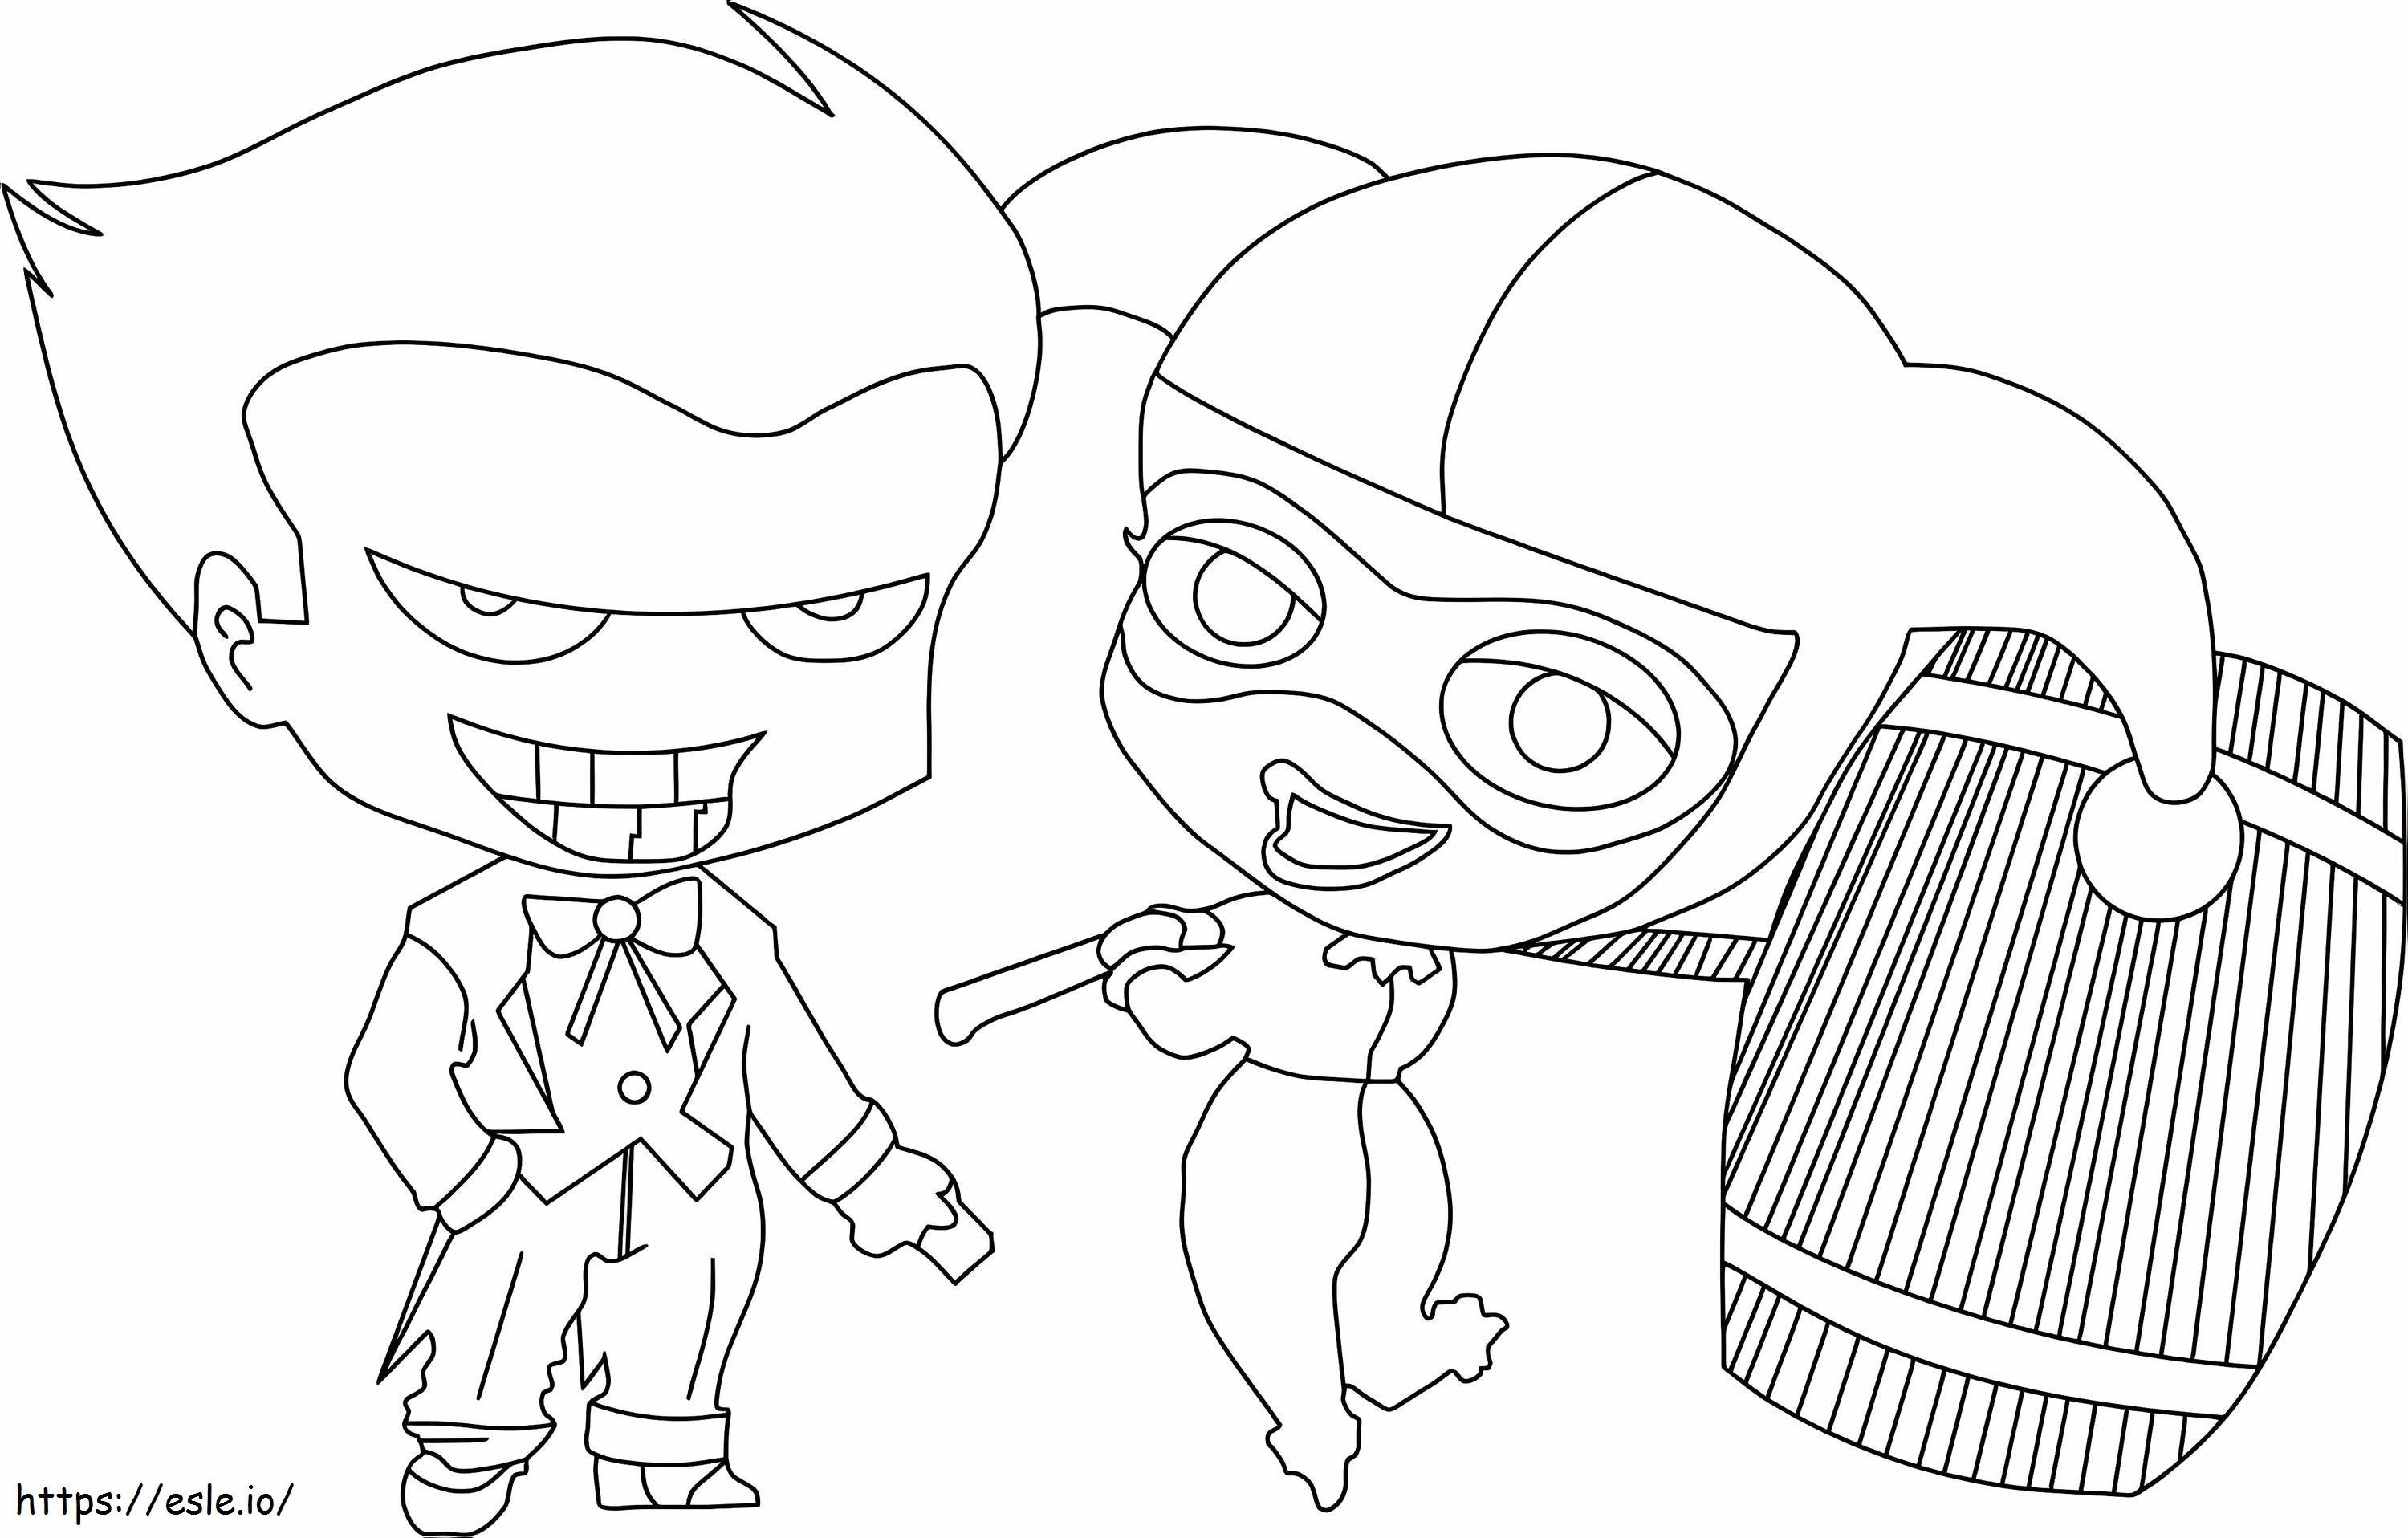 Chibi Joker I Chibi Harley Quinn Trzymając Młotek kolorowanka